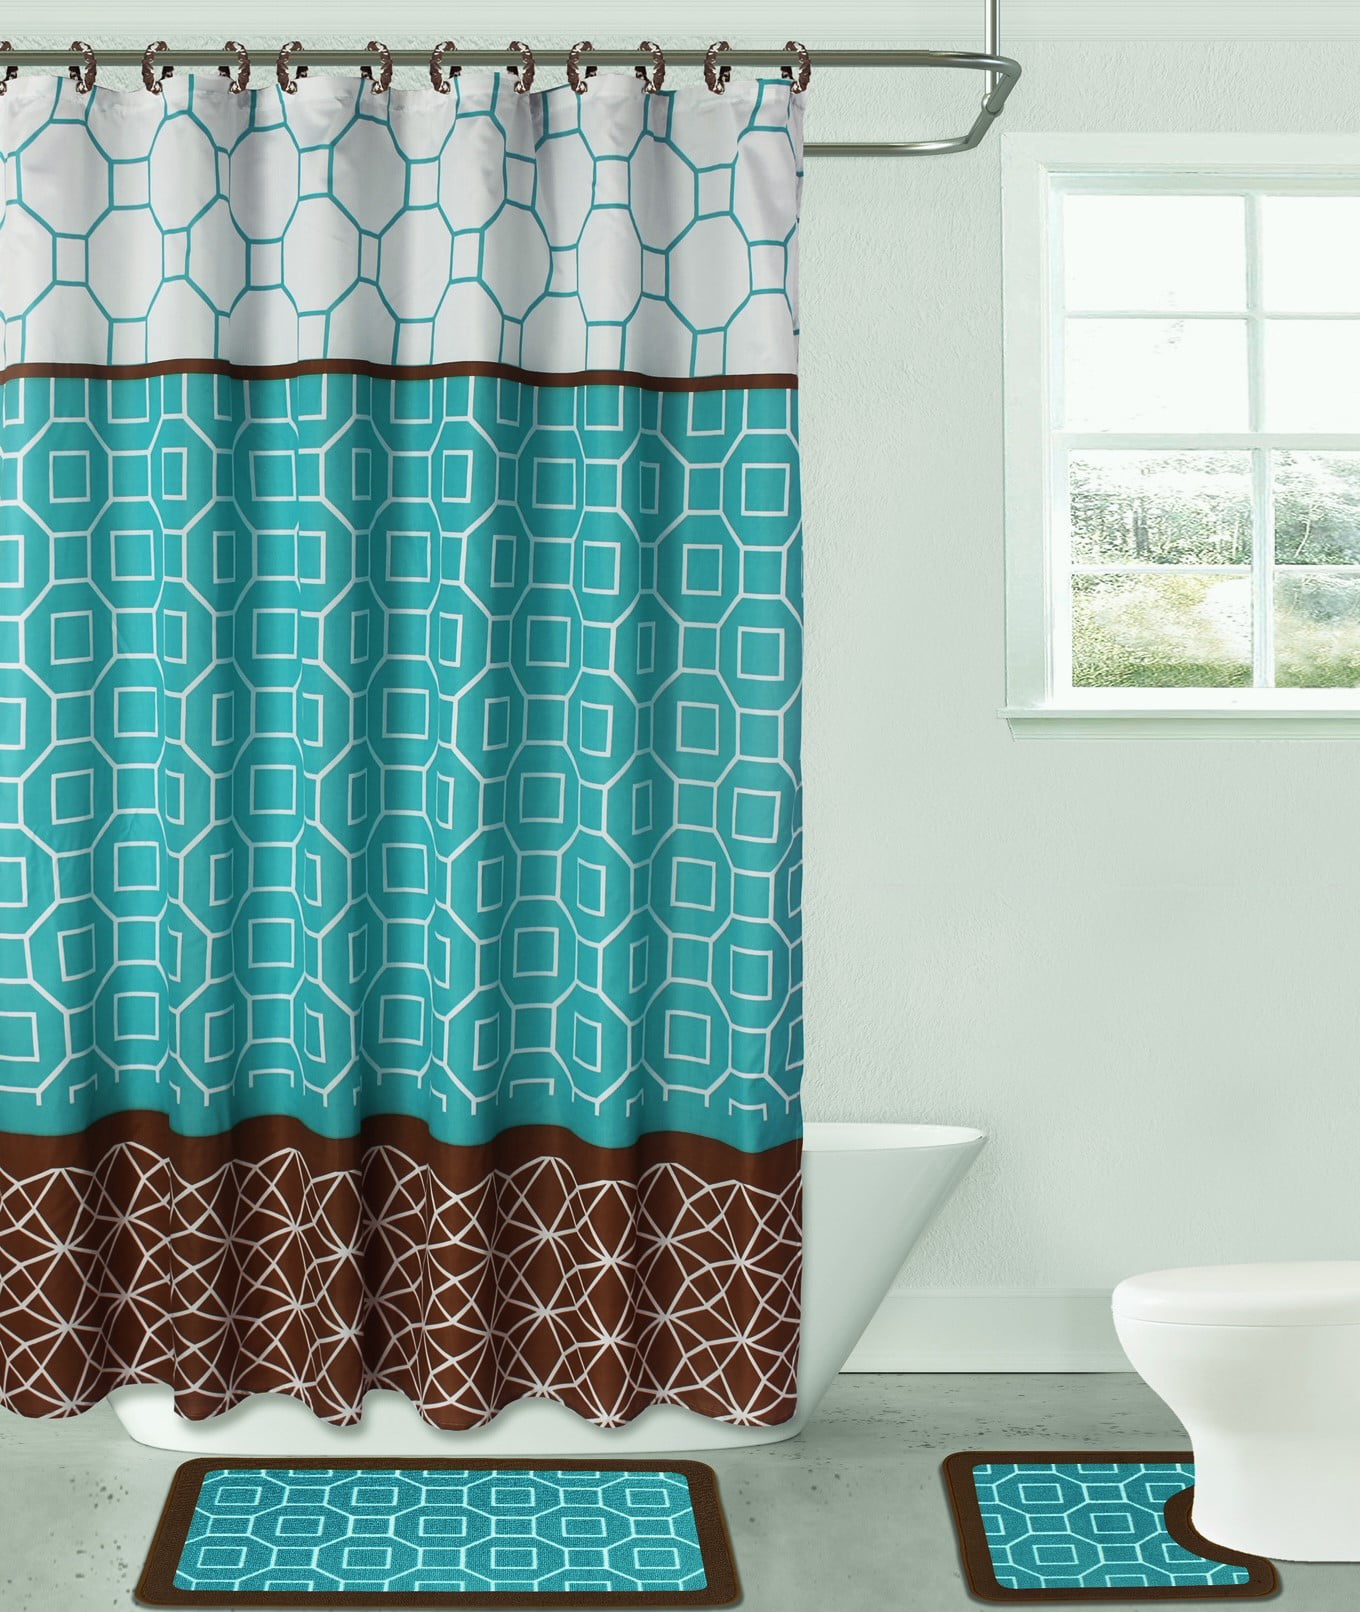 2 Non Slip Bath Mats Rugs Fabric Shower, Bathroom Sets Shower Curtain Rugs